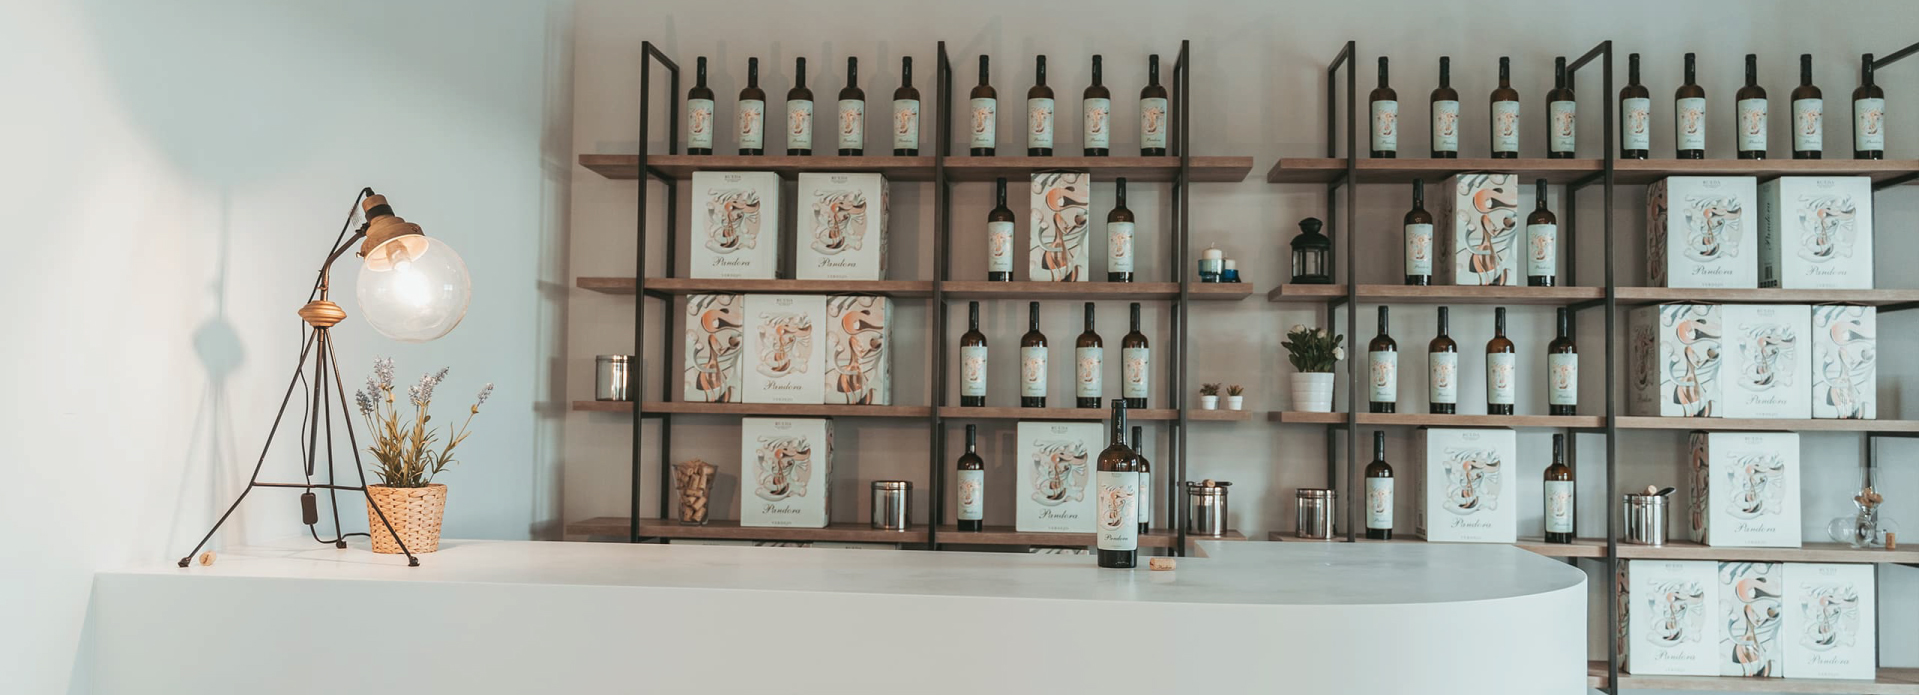 Bottles of Pandra Verdejo behind a tasting bar at the Bodegas Pandora winery in Rueda, Spain.